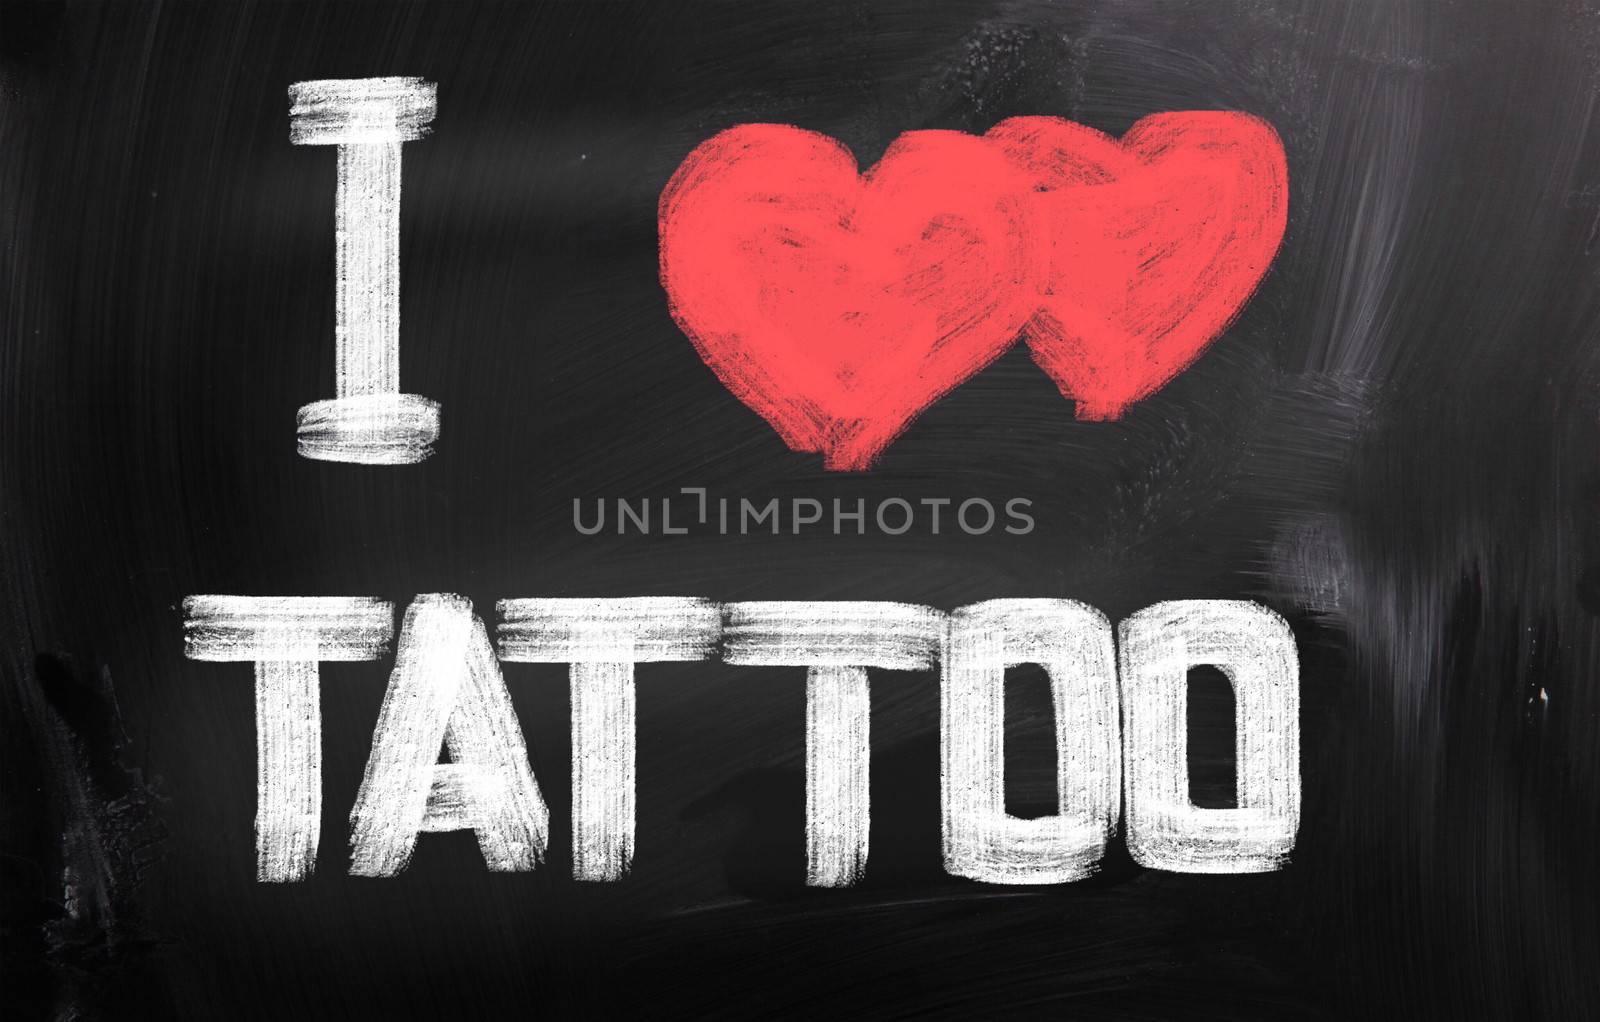 I Love Tattoo Concept